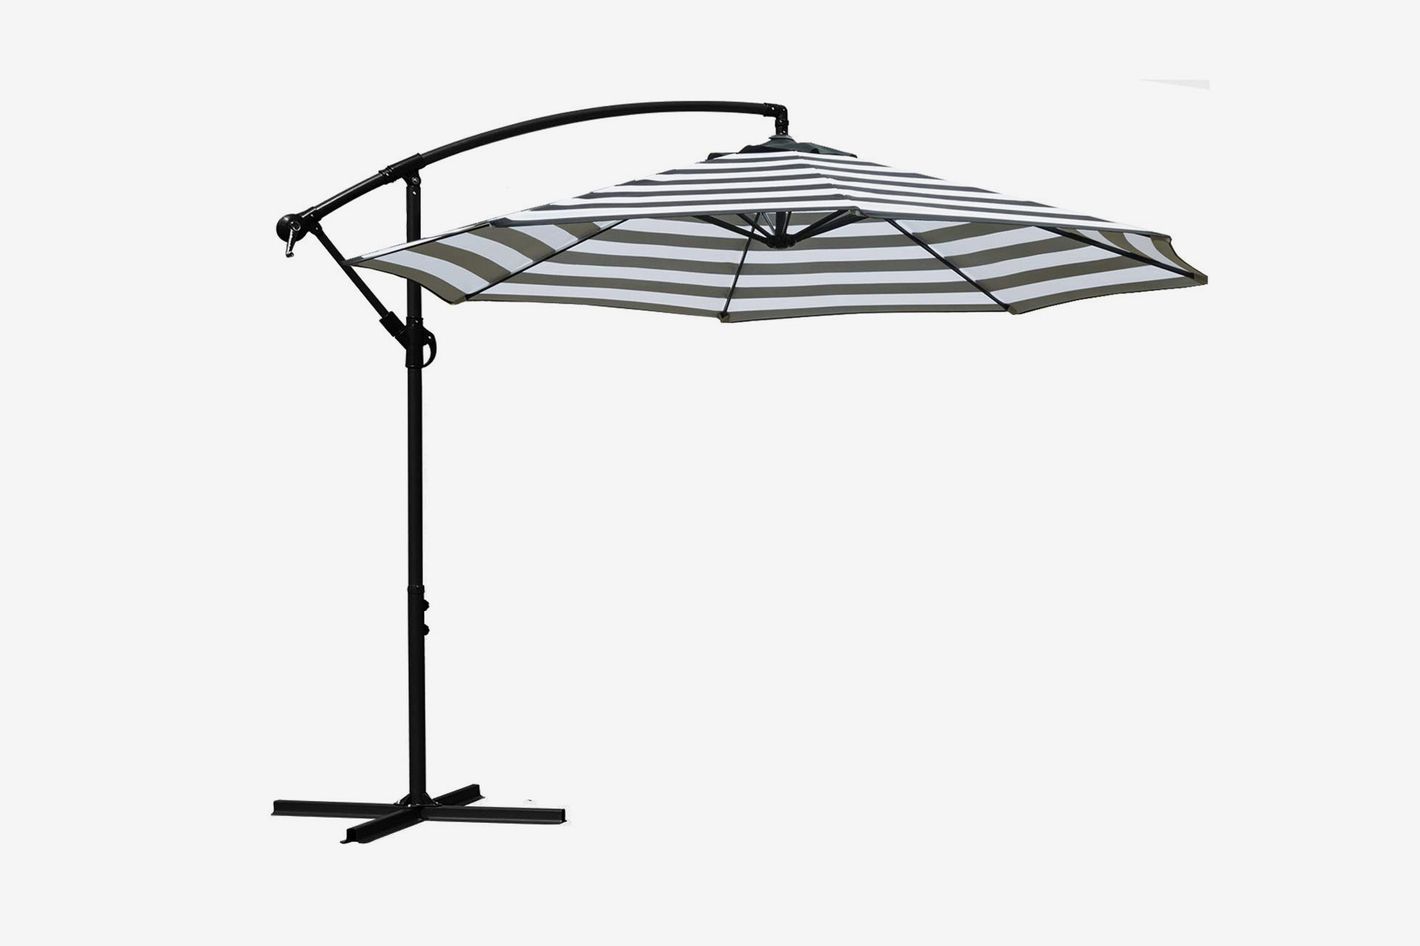 Sunnyglade 10’ Outdoor Adjustable Offset Cantilever Hanging Patio Umbrella